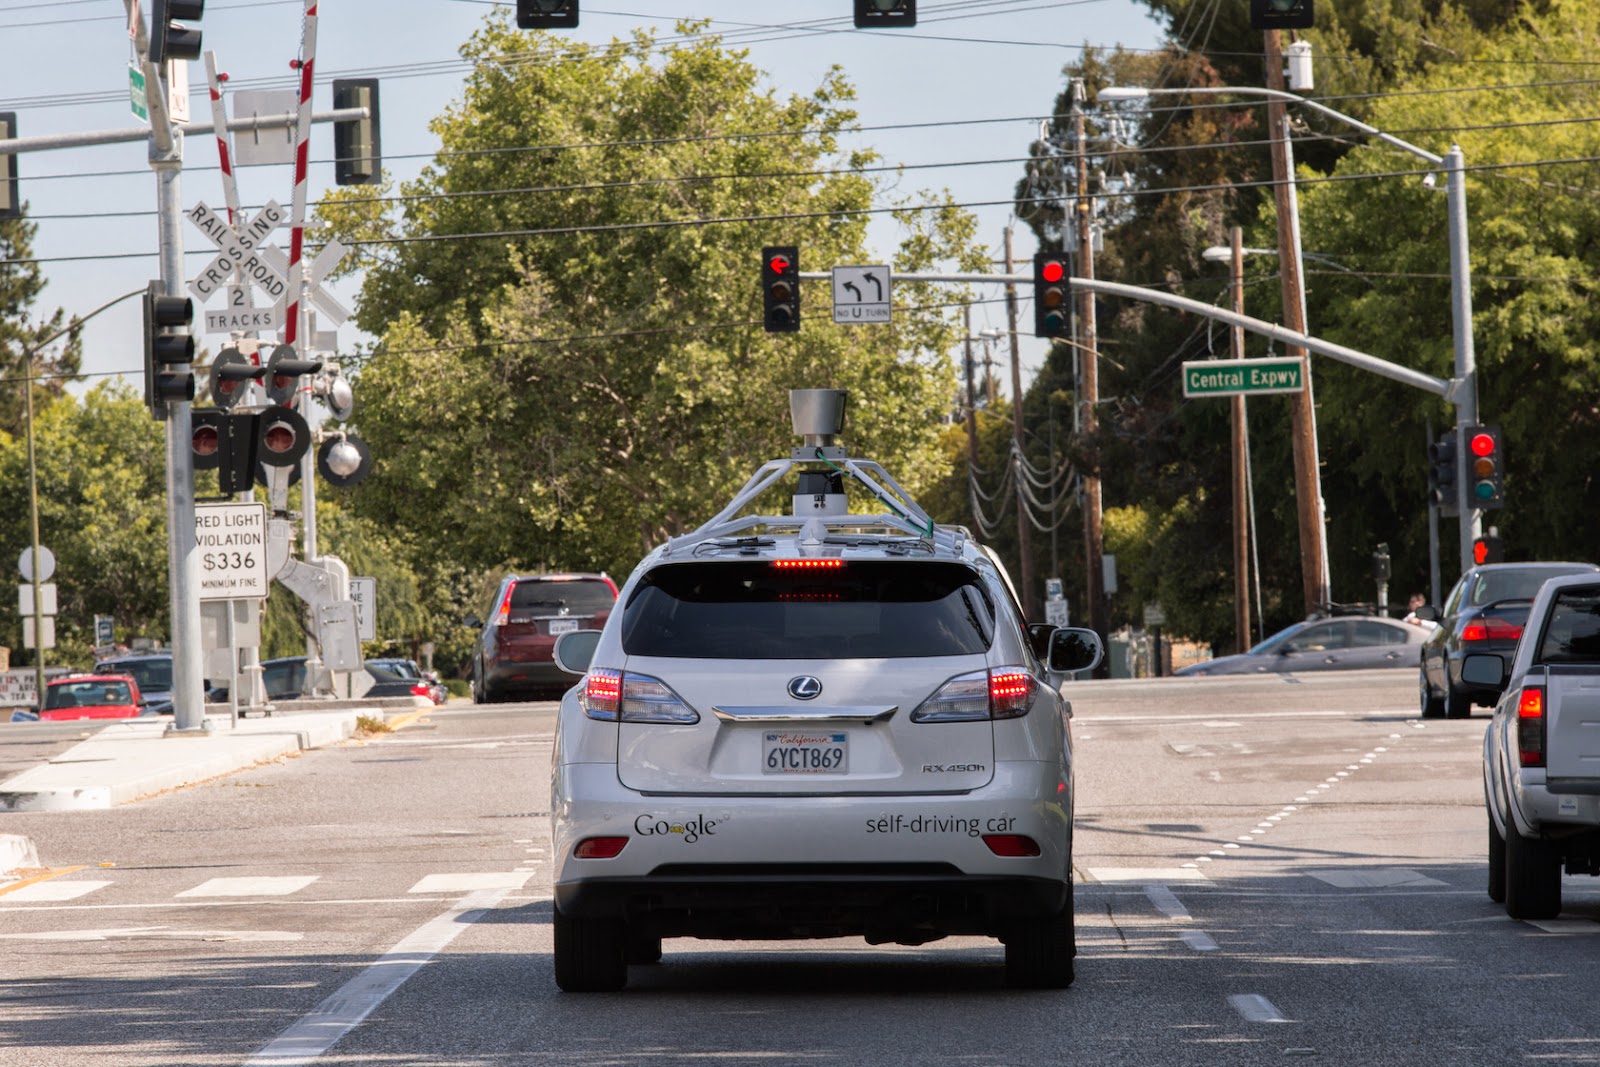 Google self-driving car on a city street